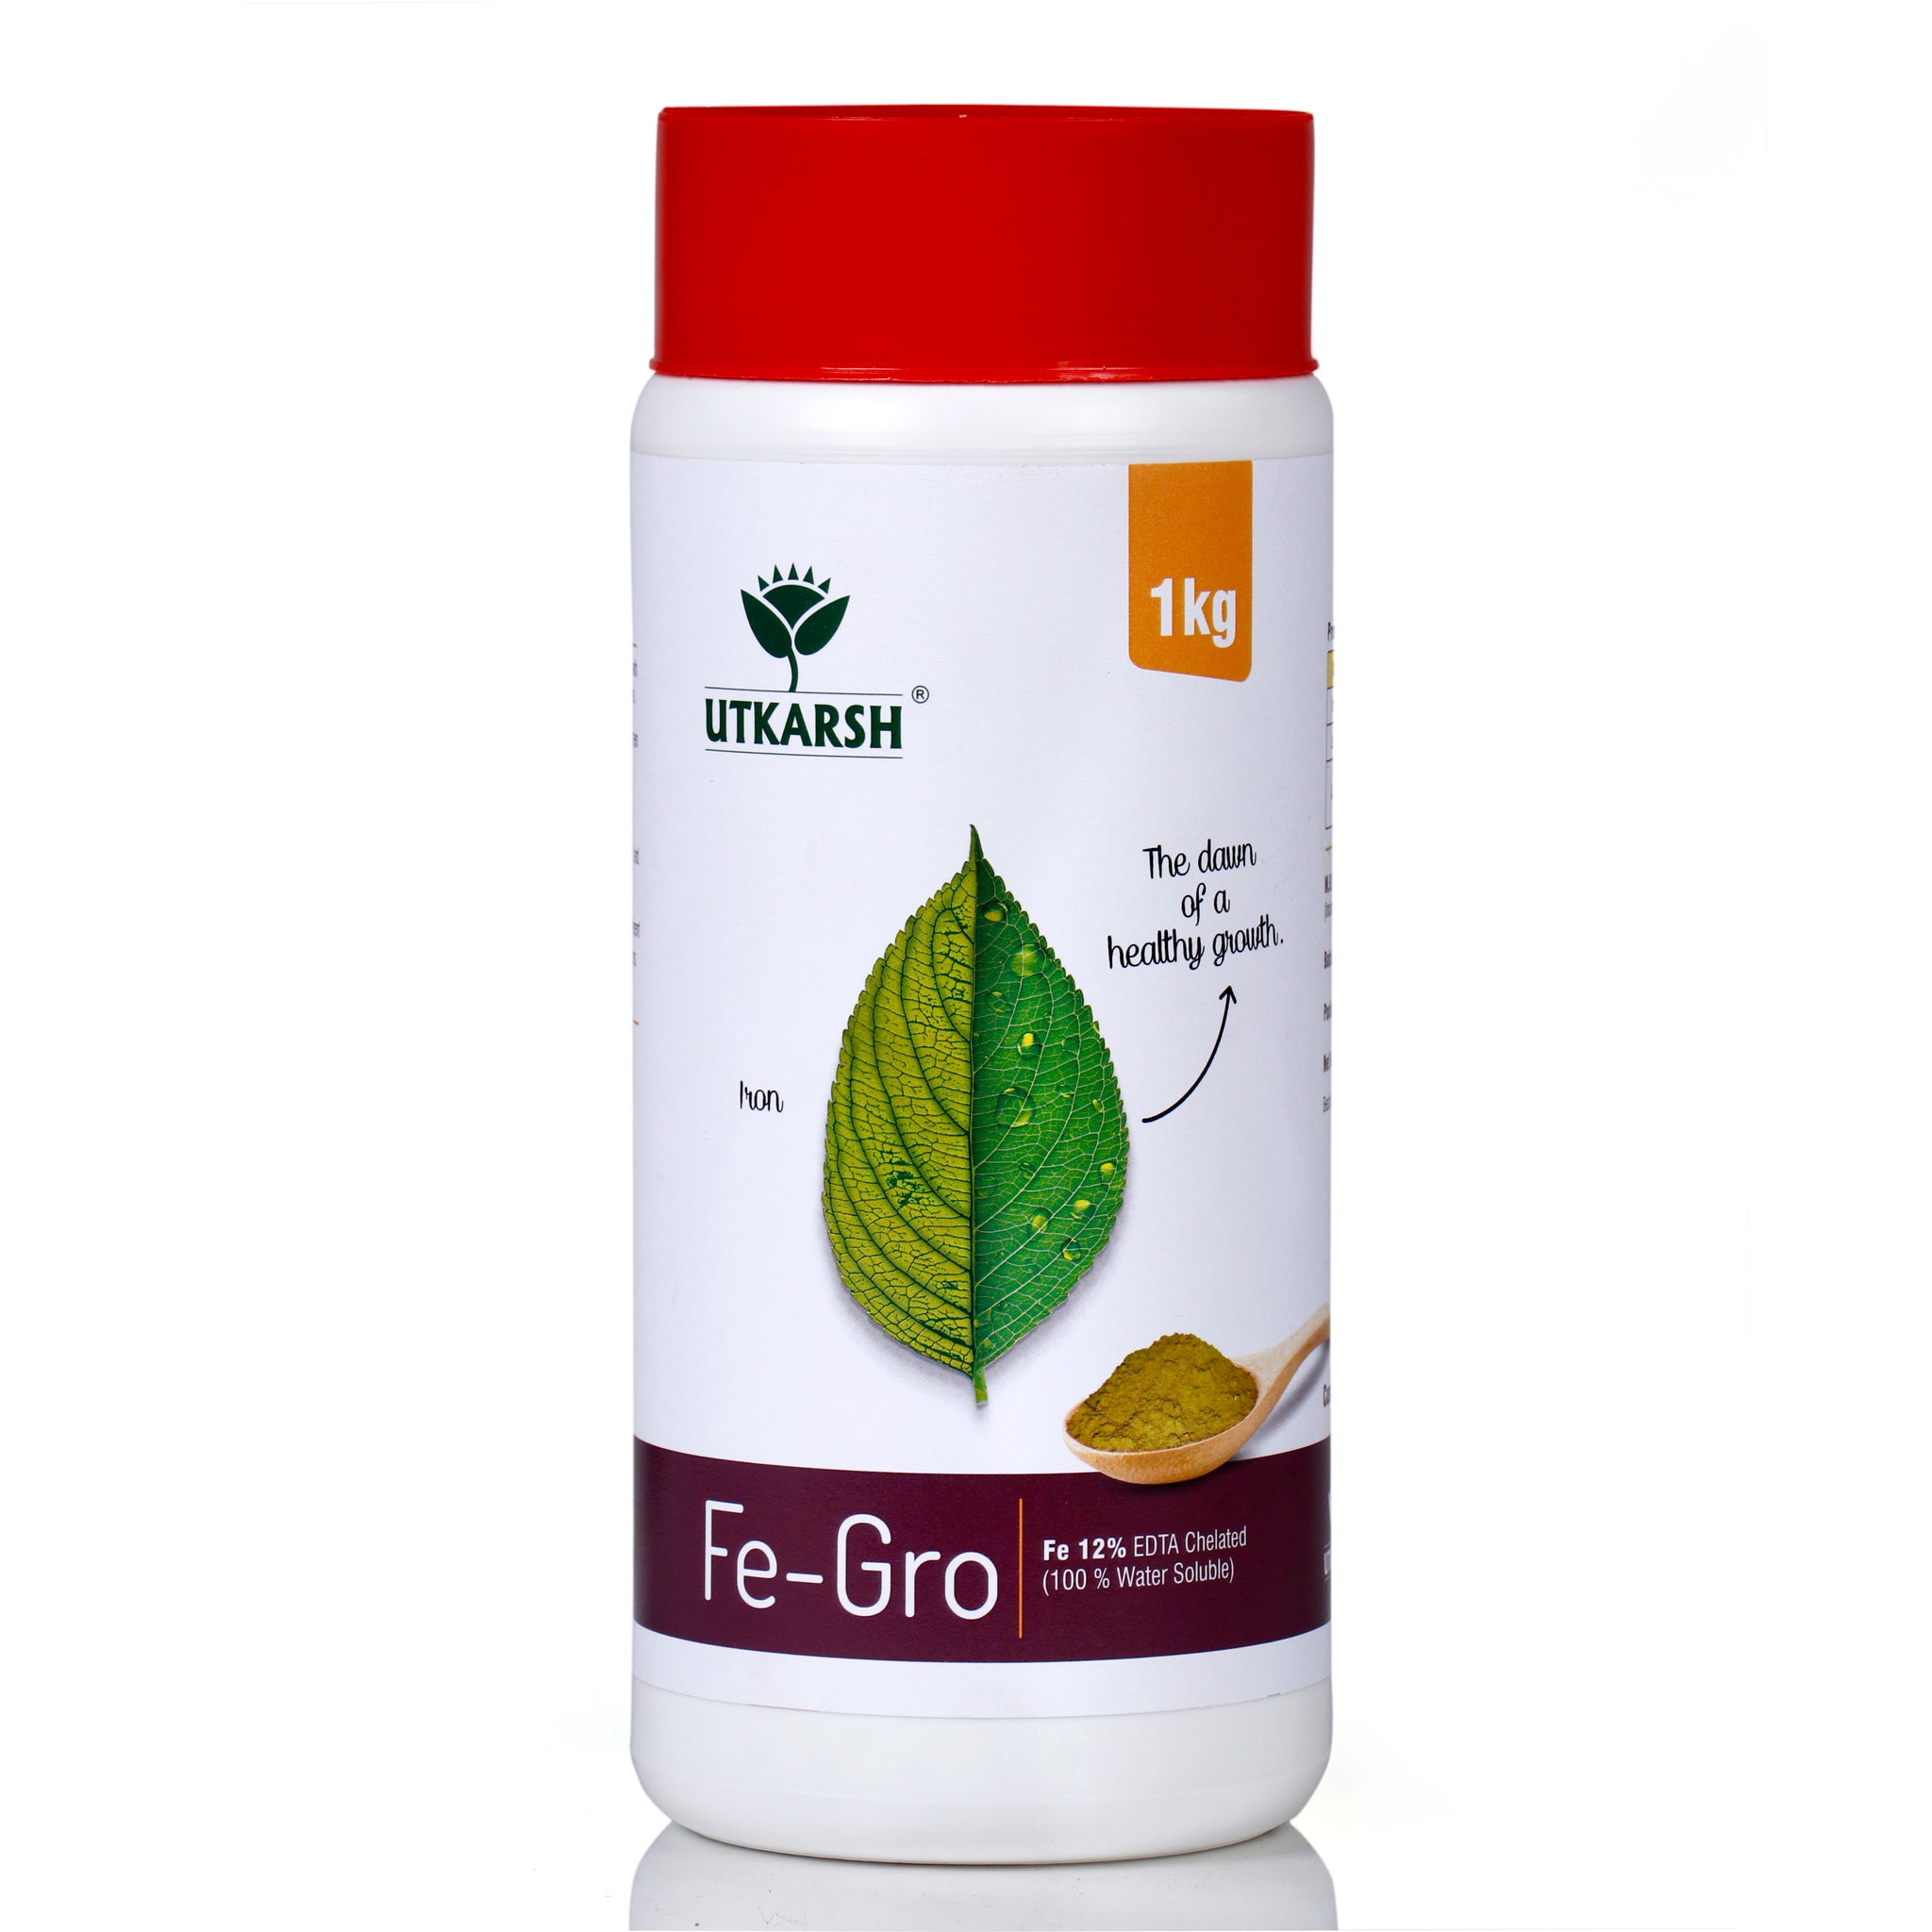 Utkarsh FeGro (Iron- Fe-12% EDTA Chelated) (100% Water Soluble Foliar Spray) (EDTA Chelated Fertilizers)